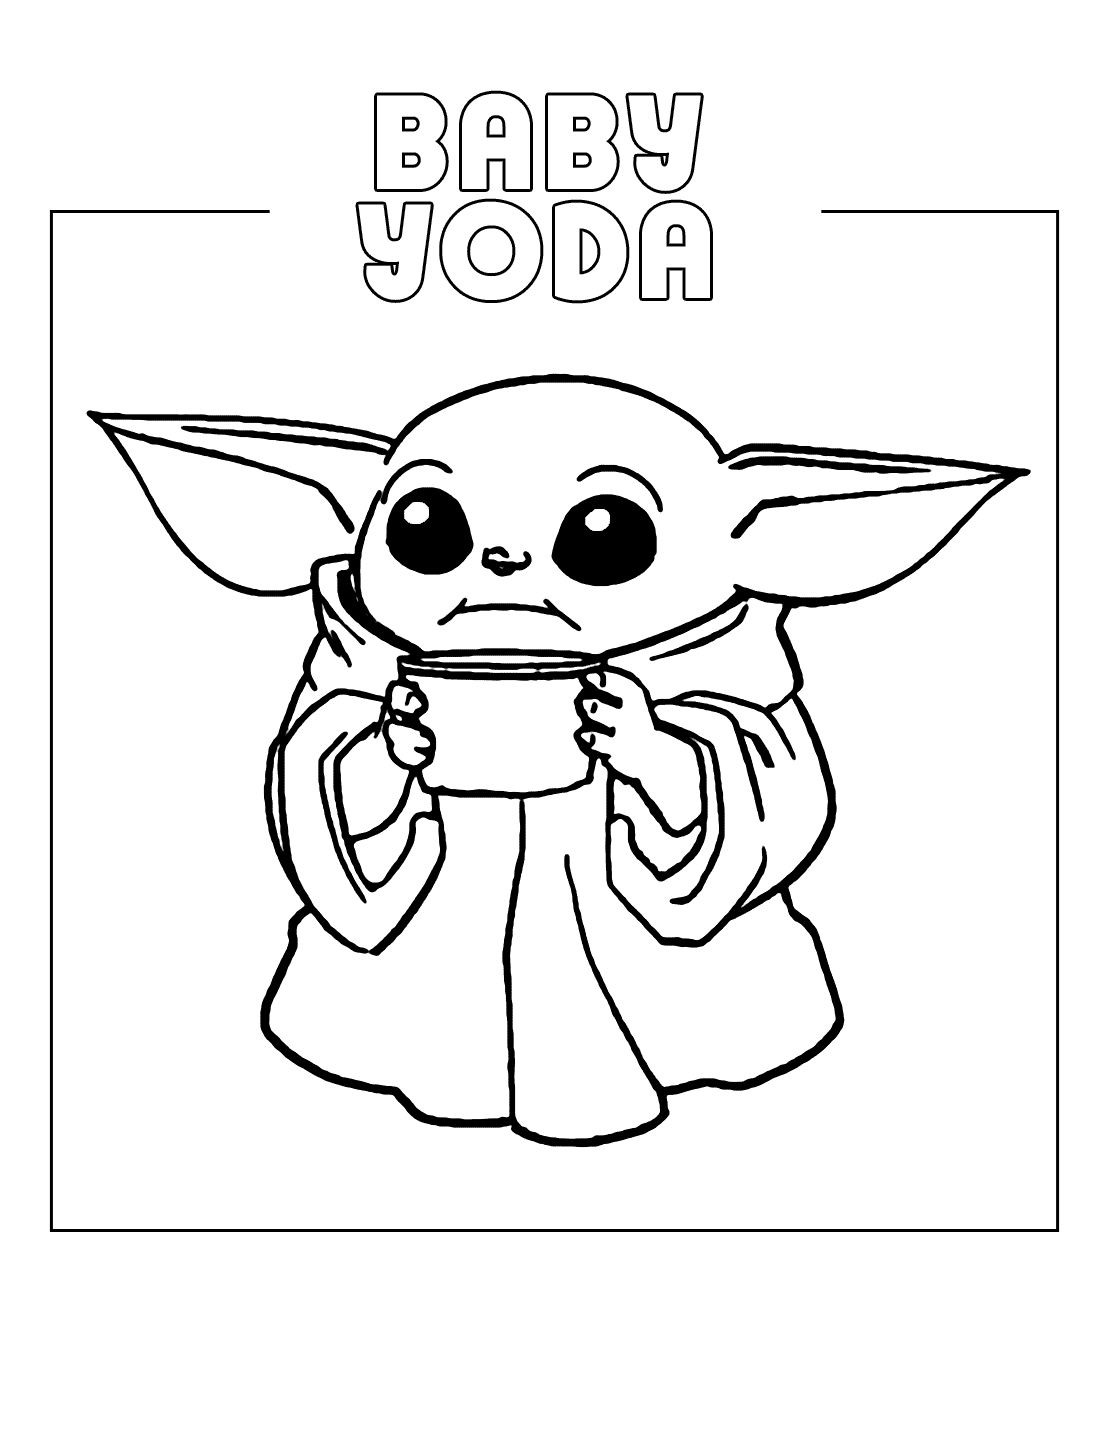 Cute Baby Yoda Coloring Page